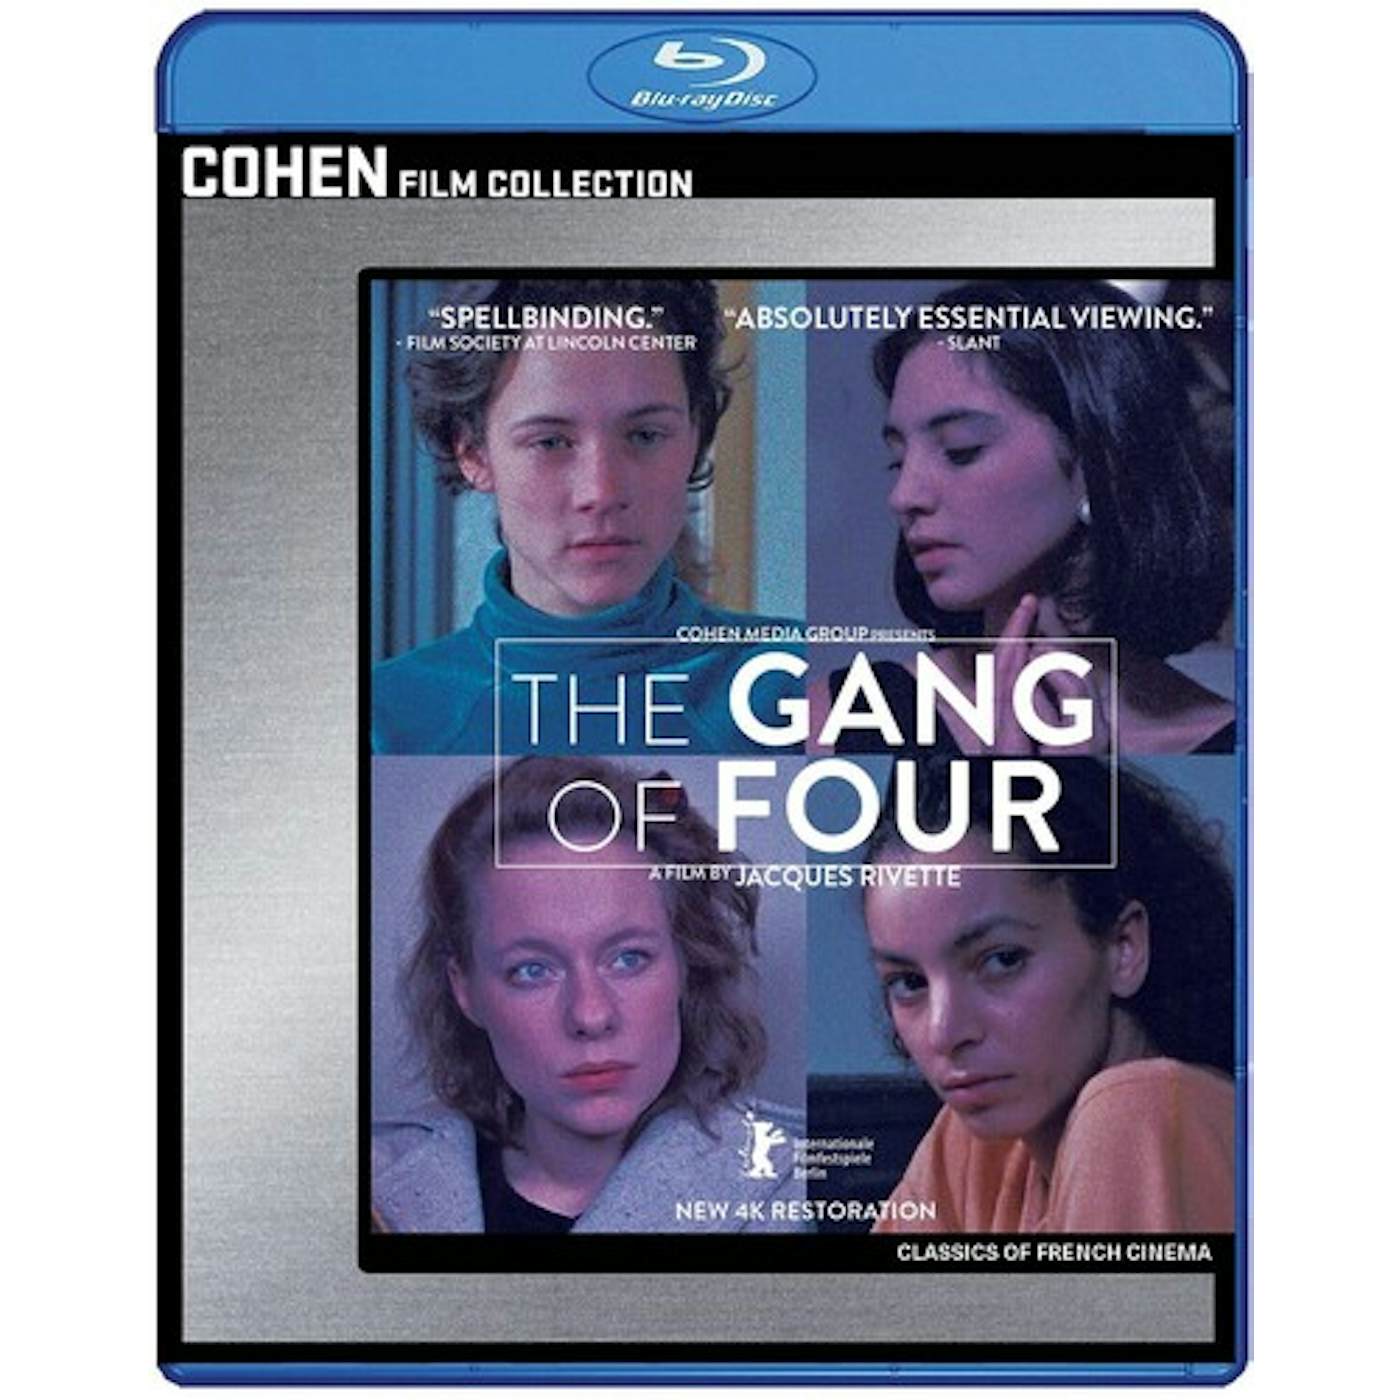 GANG OF FOUR Blu-ray